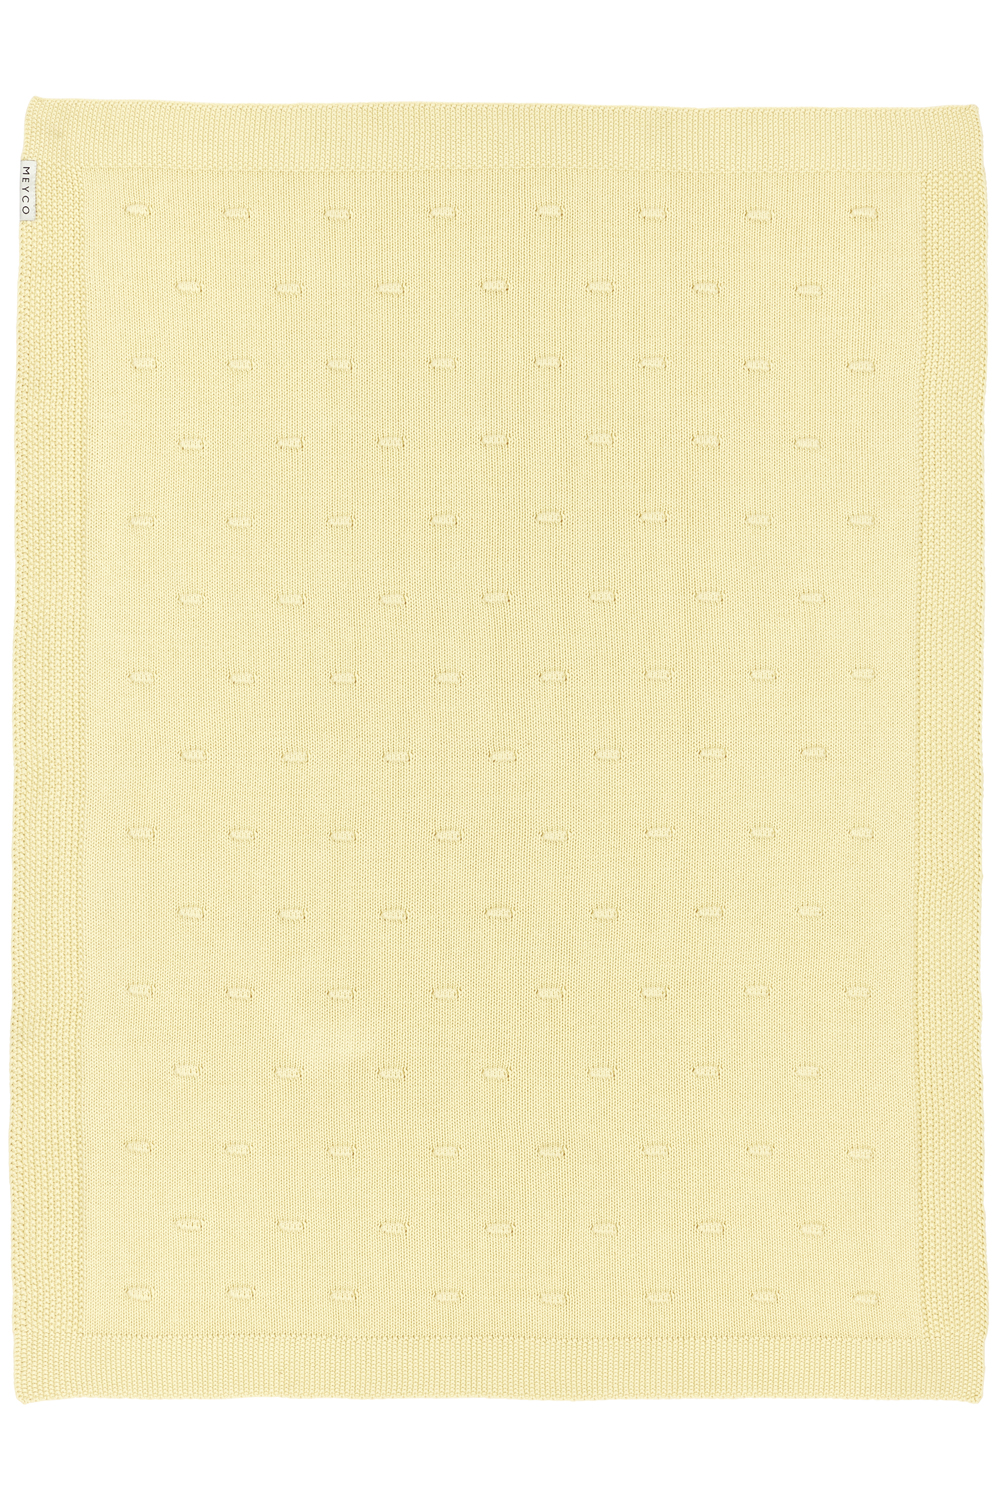 Ledikant deken Knots - soft yellow - 100x150cm